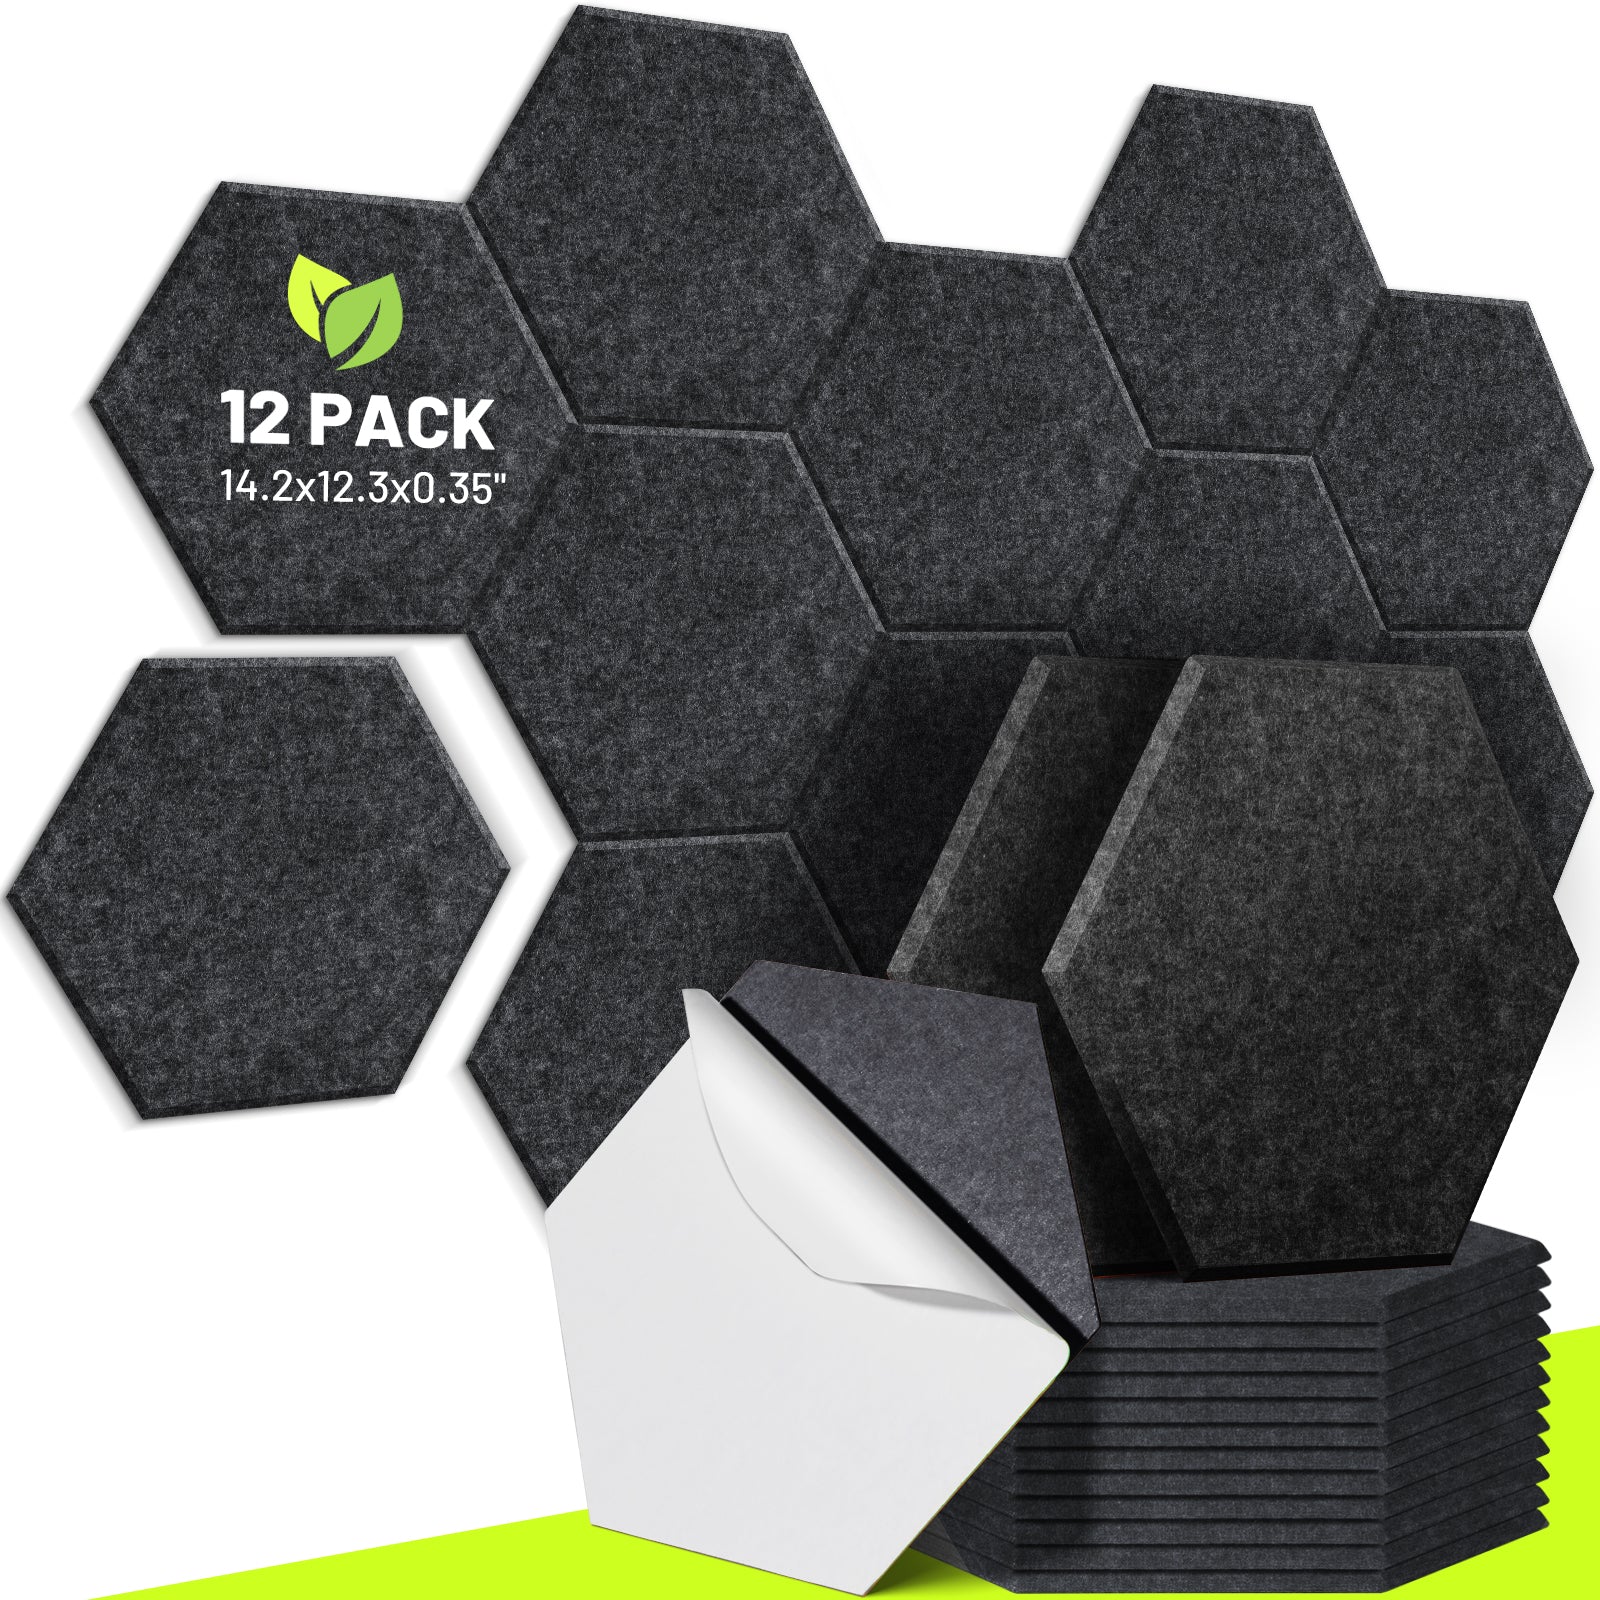 12 Pack Self Adhesive Acoustic Panels